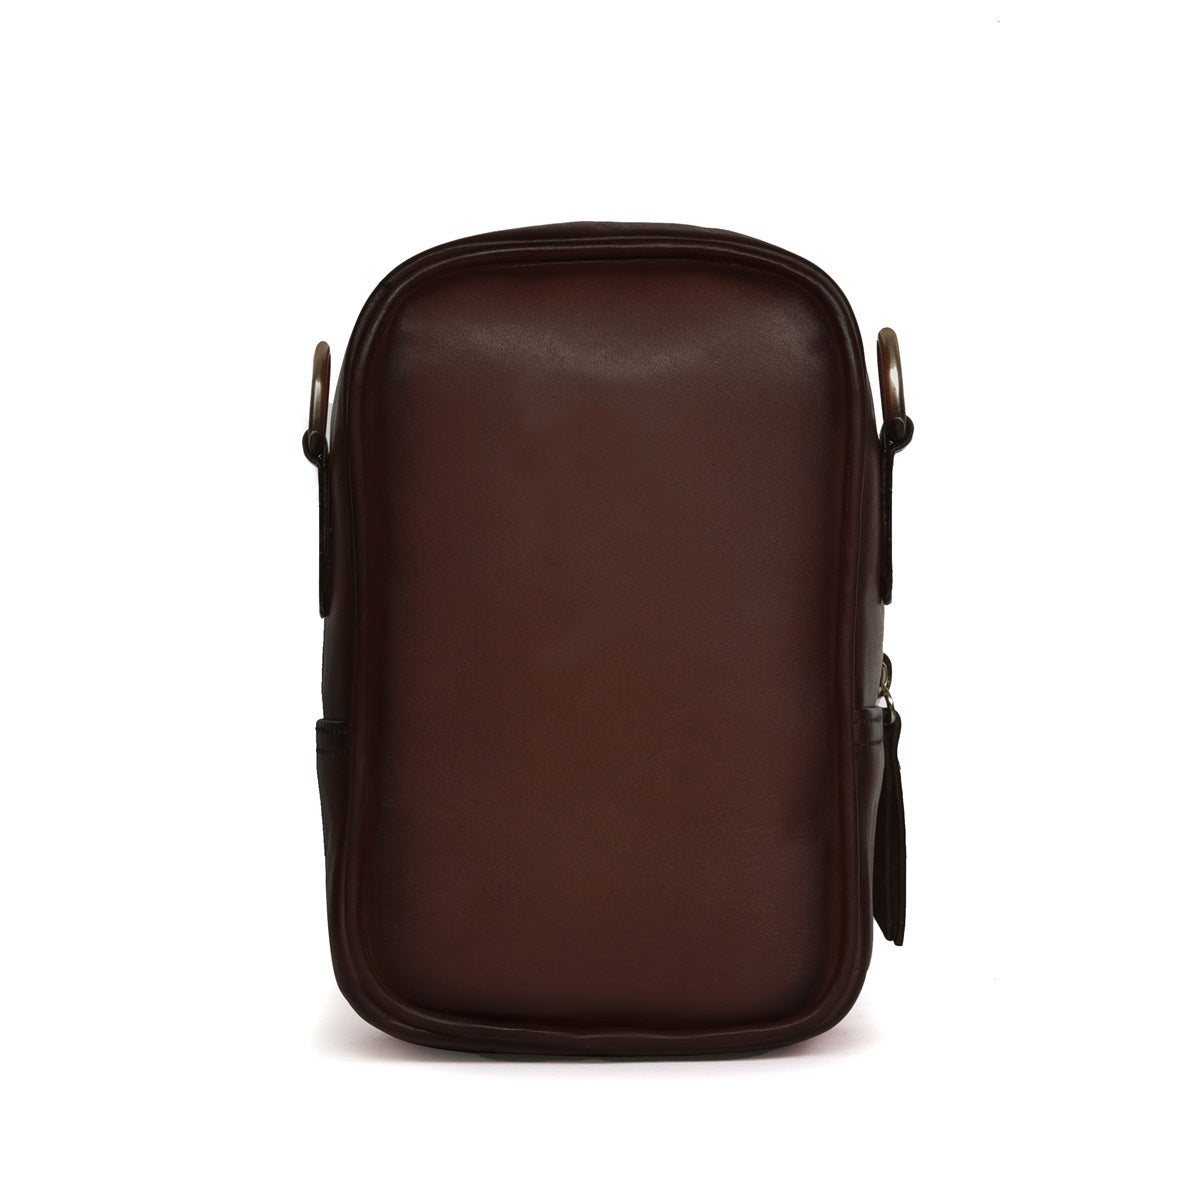 Flap Over Button-Zip Closure Metal Lion Dark Brown Cross-Body Leather Bag Adjustable Shoulder Strap